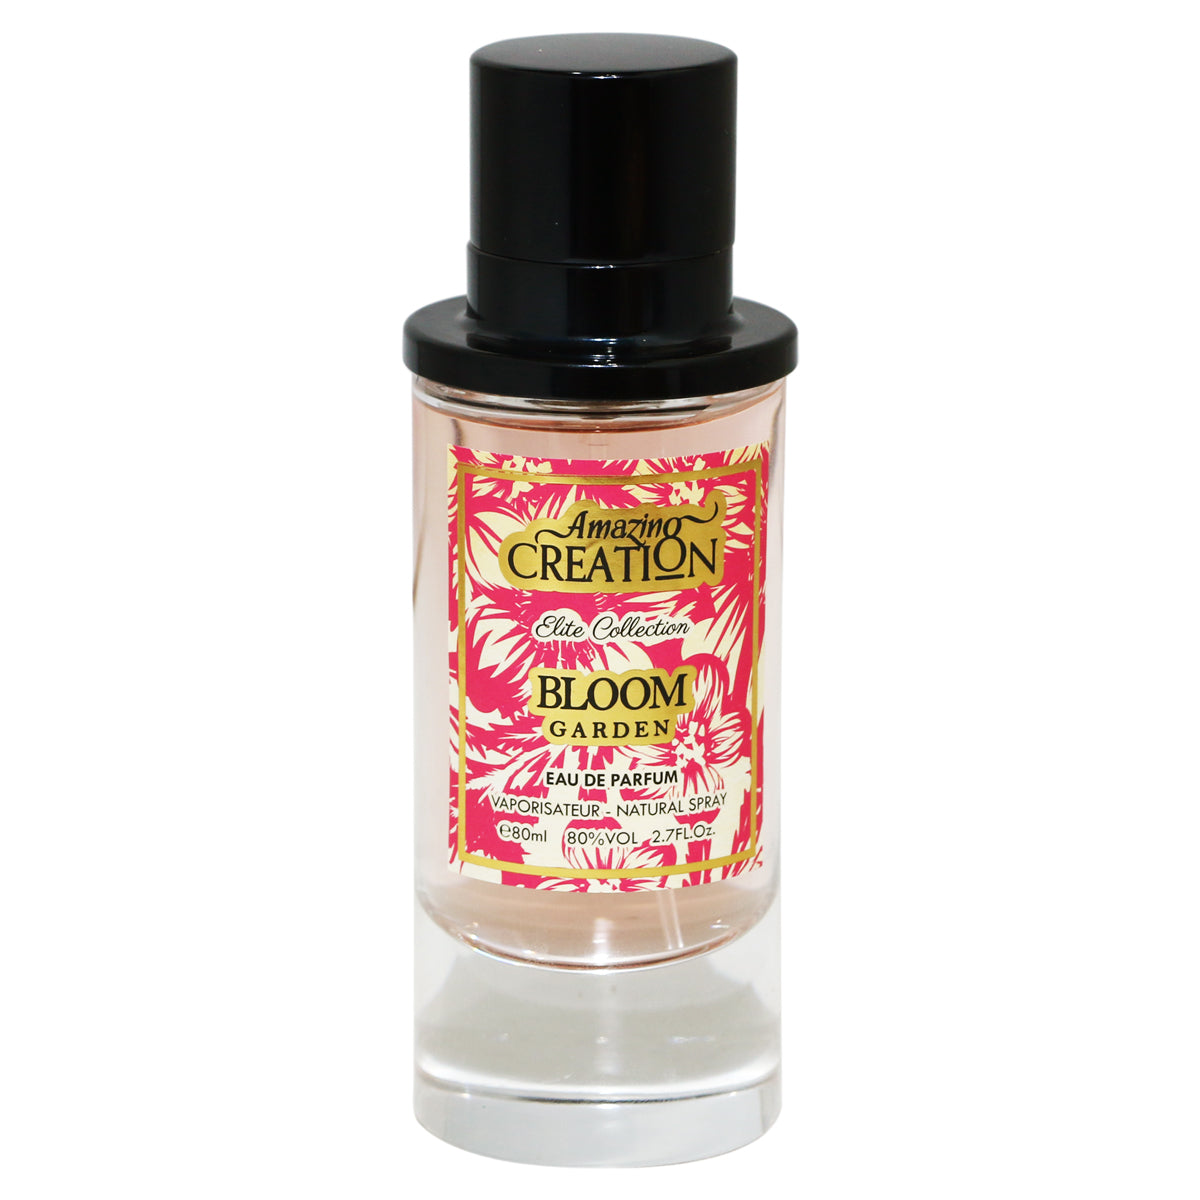 Bloom Garden, Perfume for Women By Amazing Creation Elite Collection, EDP, 80ml - samawa perfumes 